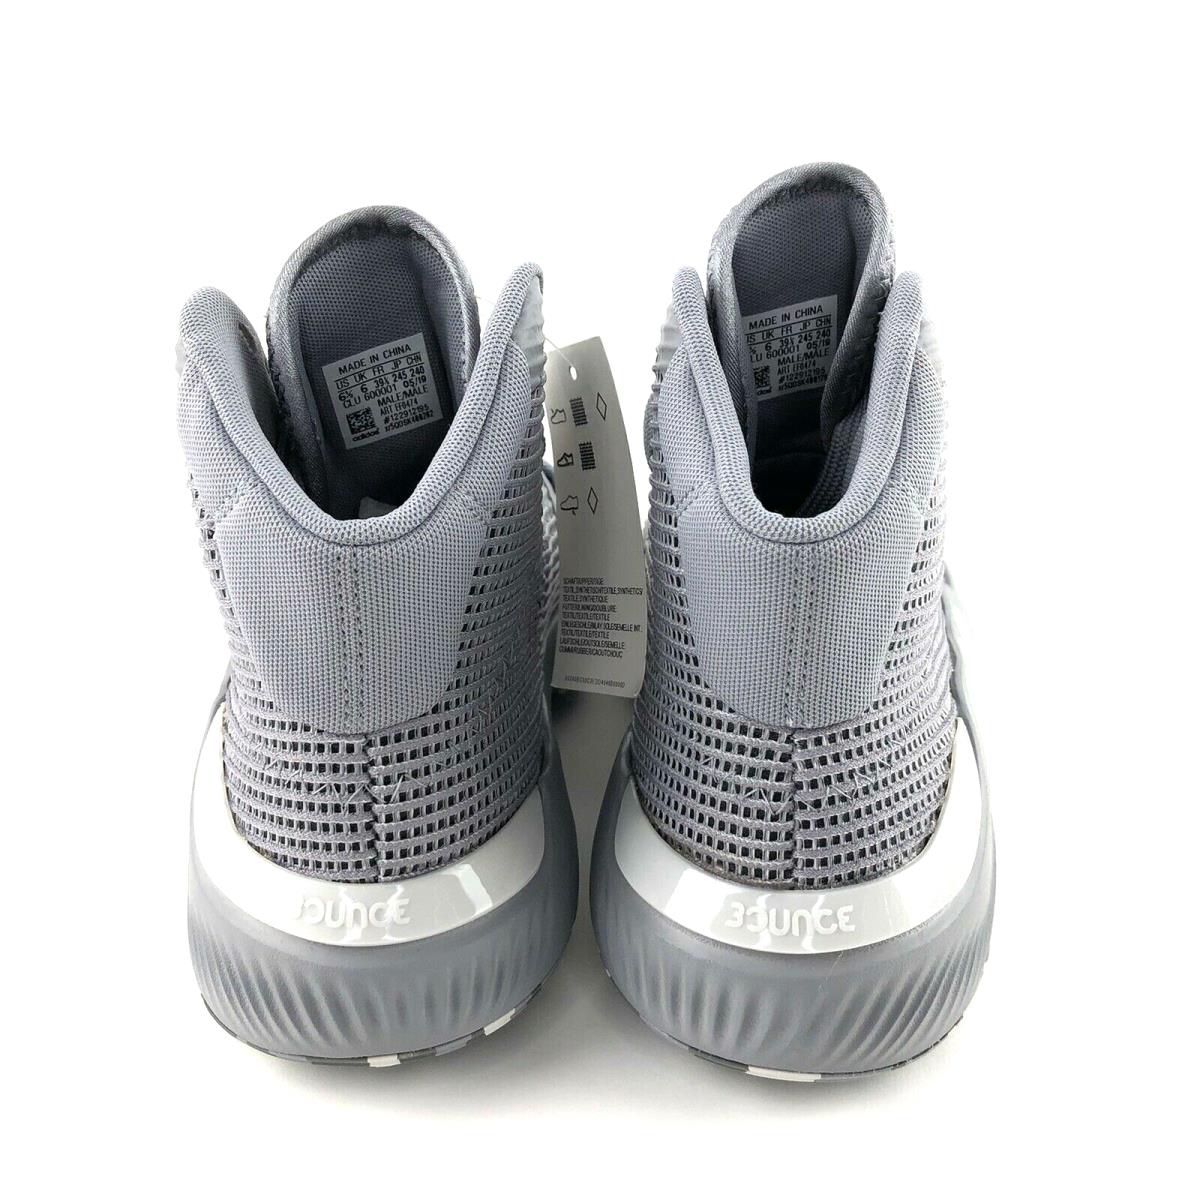 Adidas shoes Pro Bounce - Gray 4